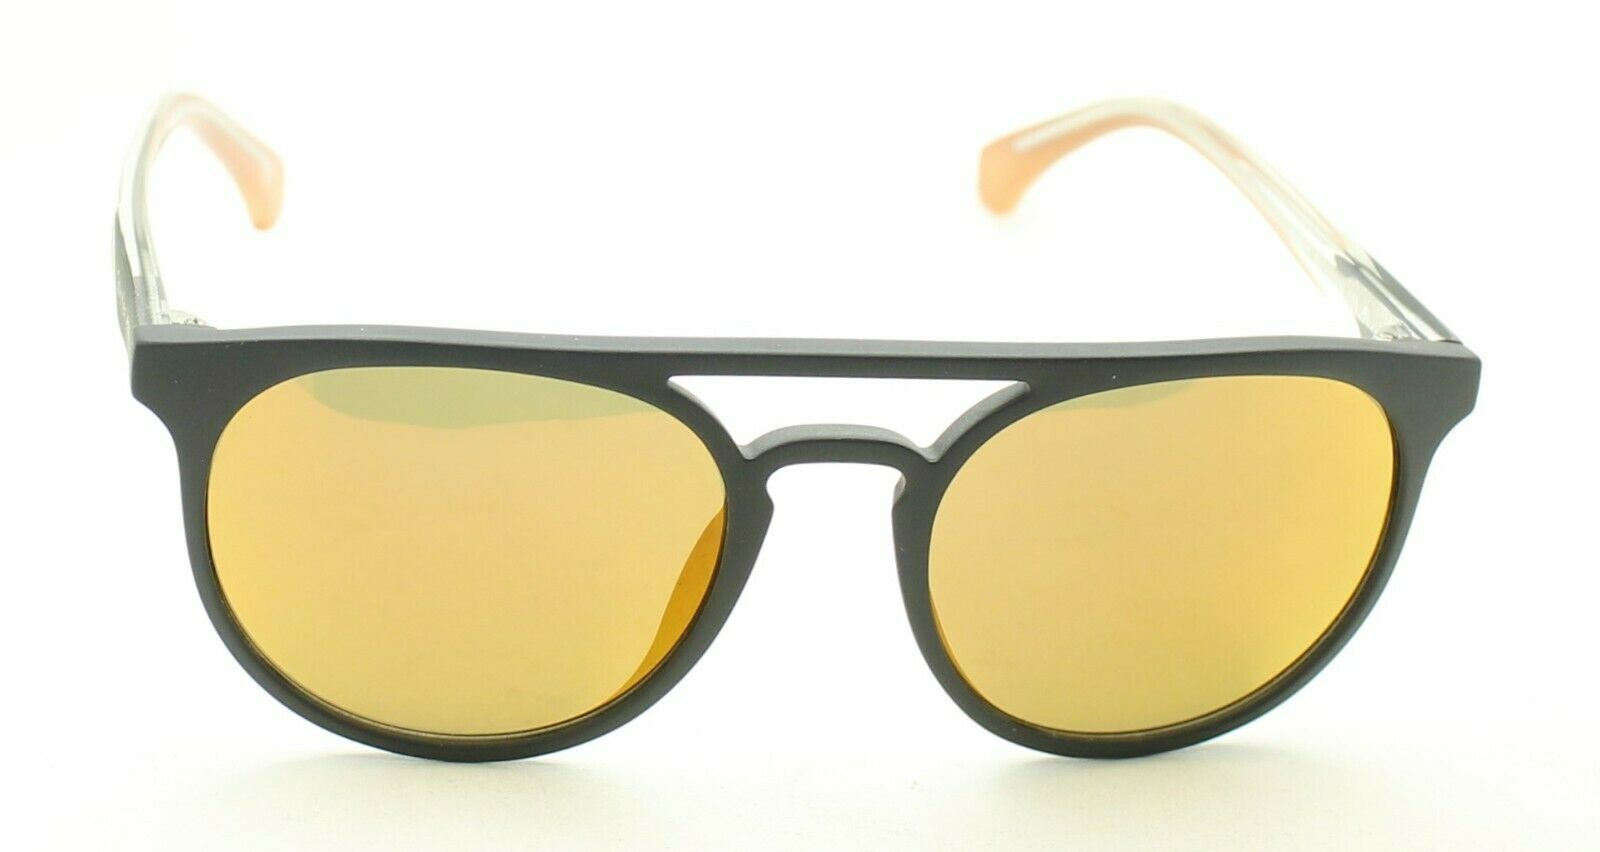 CALVIN KLEIN JEANS CKJ822S 002 51mm Sunglasses Shades Glasses New - BNIB